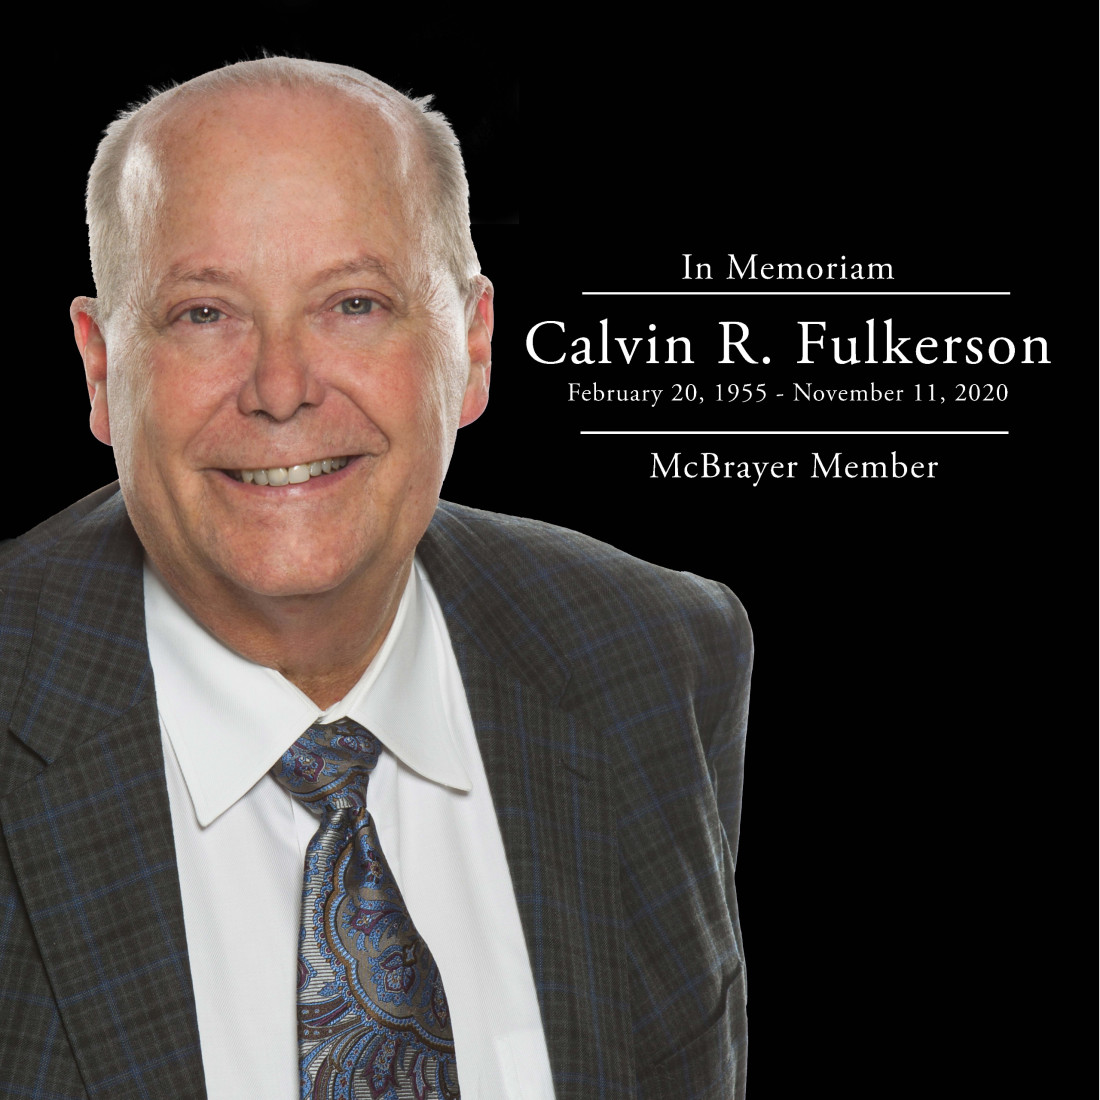 In Memoriam: Calvin Fulkerson